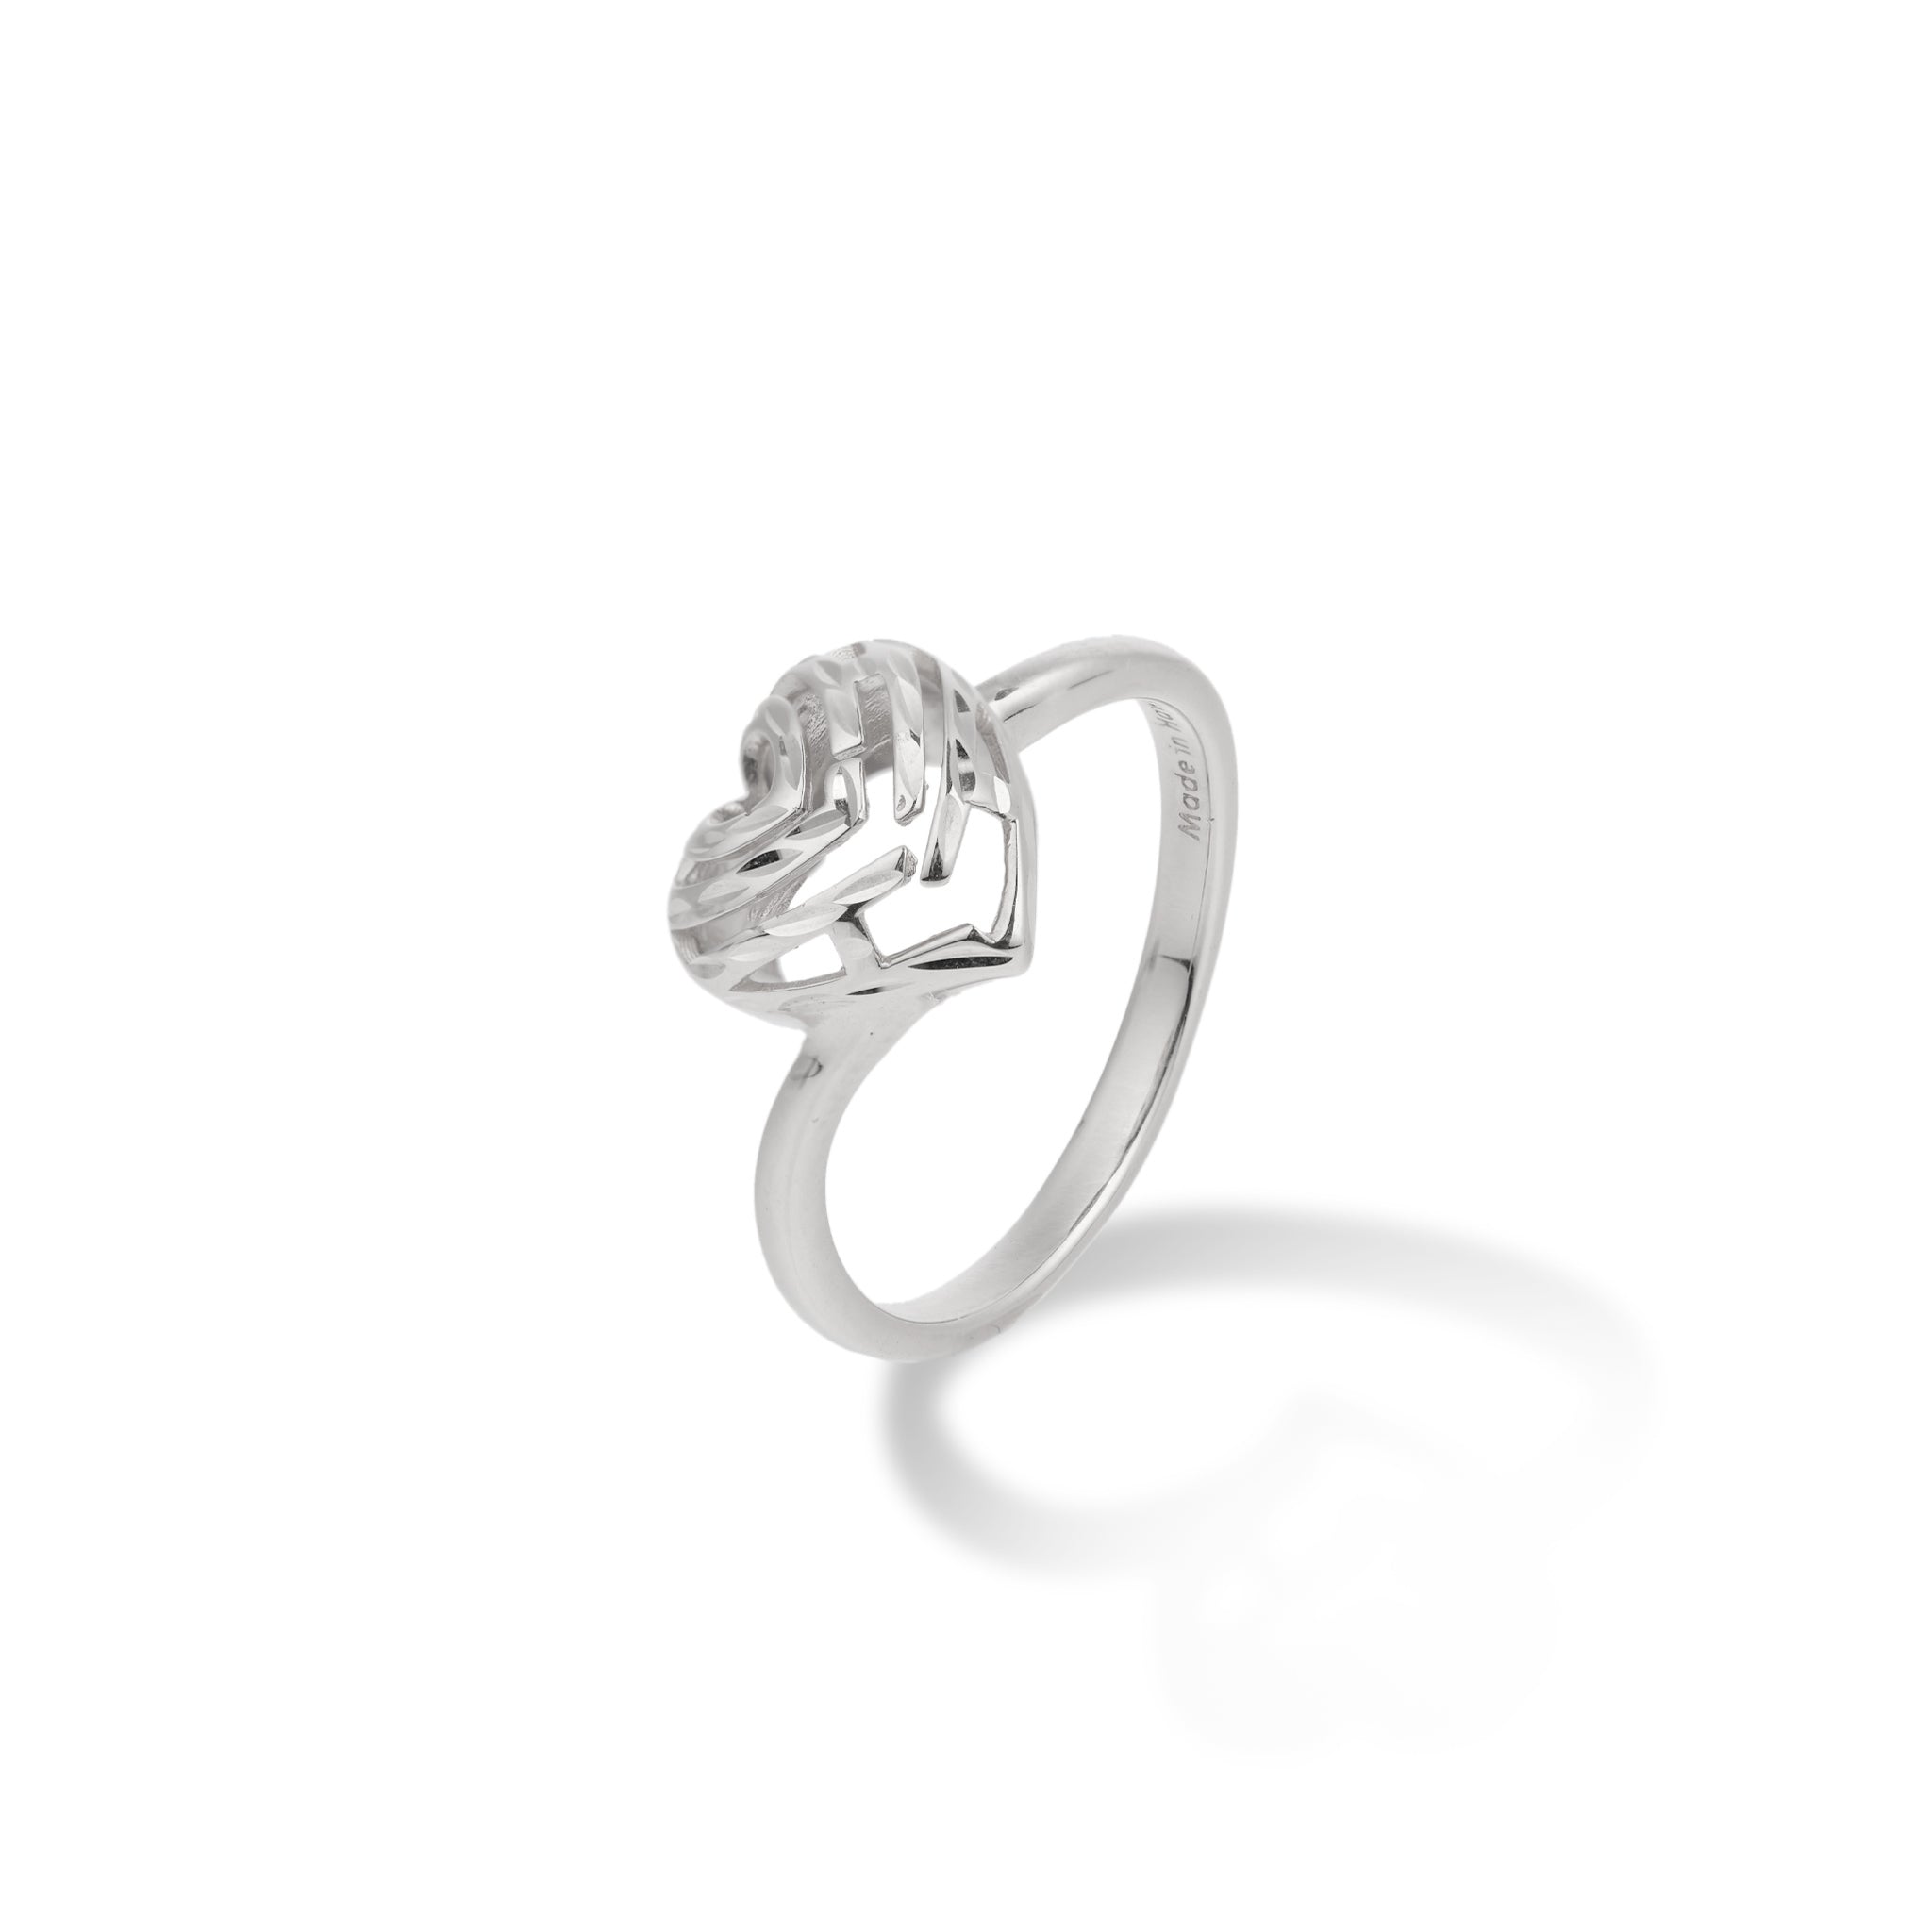 Aloha Heart Ring in White Gold - 11mm